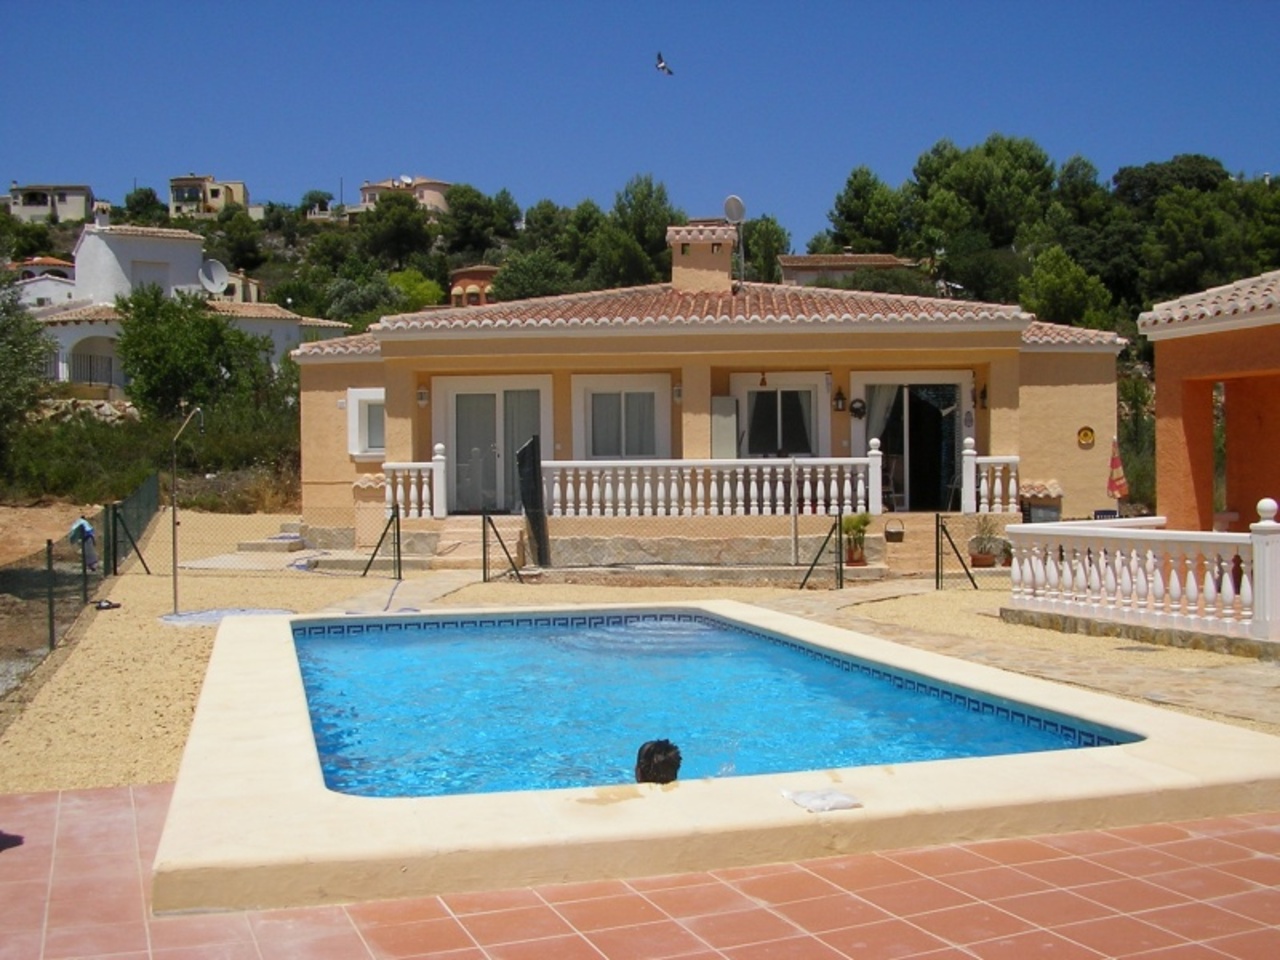 For sale: 2 bedroom house / villa in Alcalali